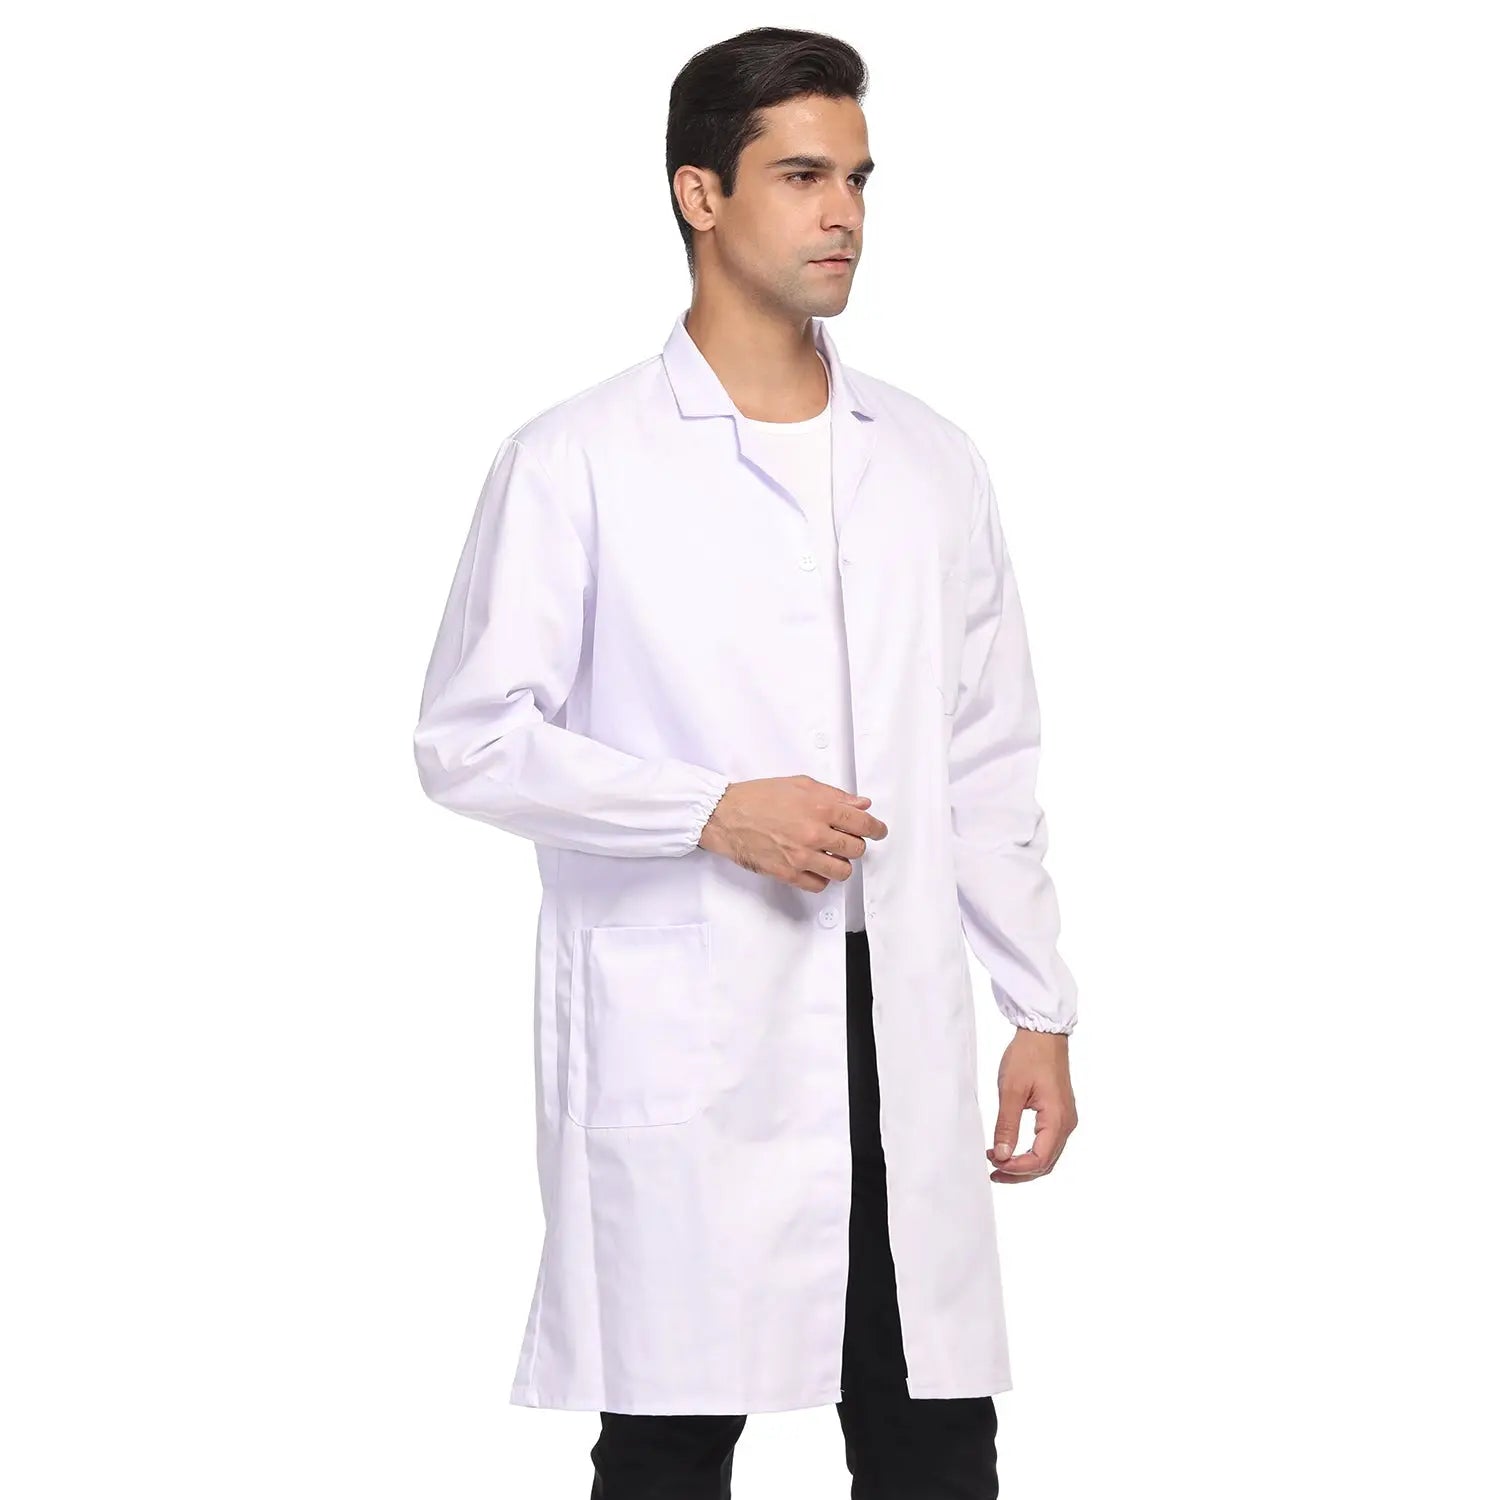 Unisex Lab Coat with Elastic Cuffs, 3 Pocket Full-Length Long Sleeve Lab Coat - StonyLab Lab Protections 